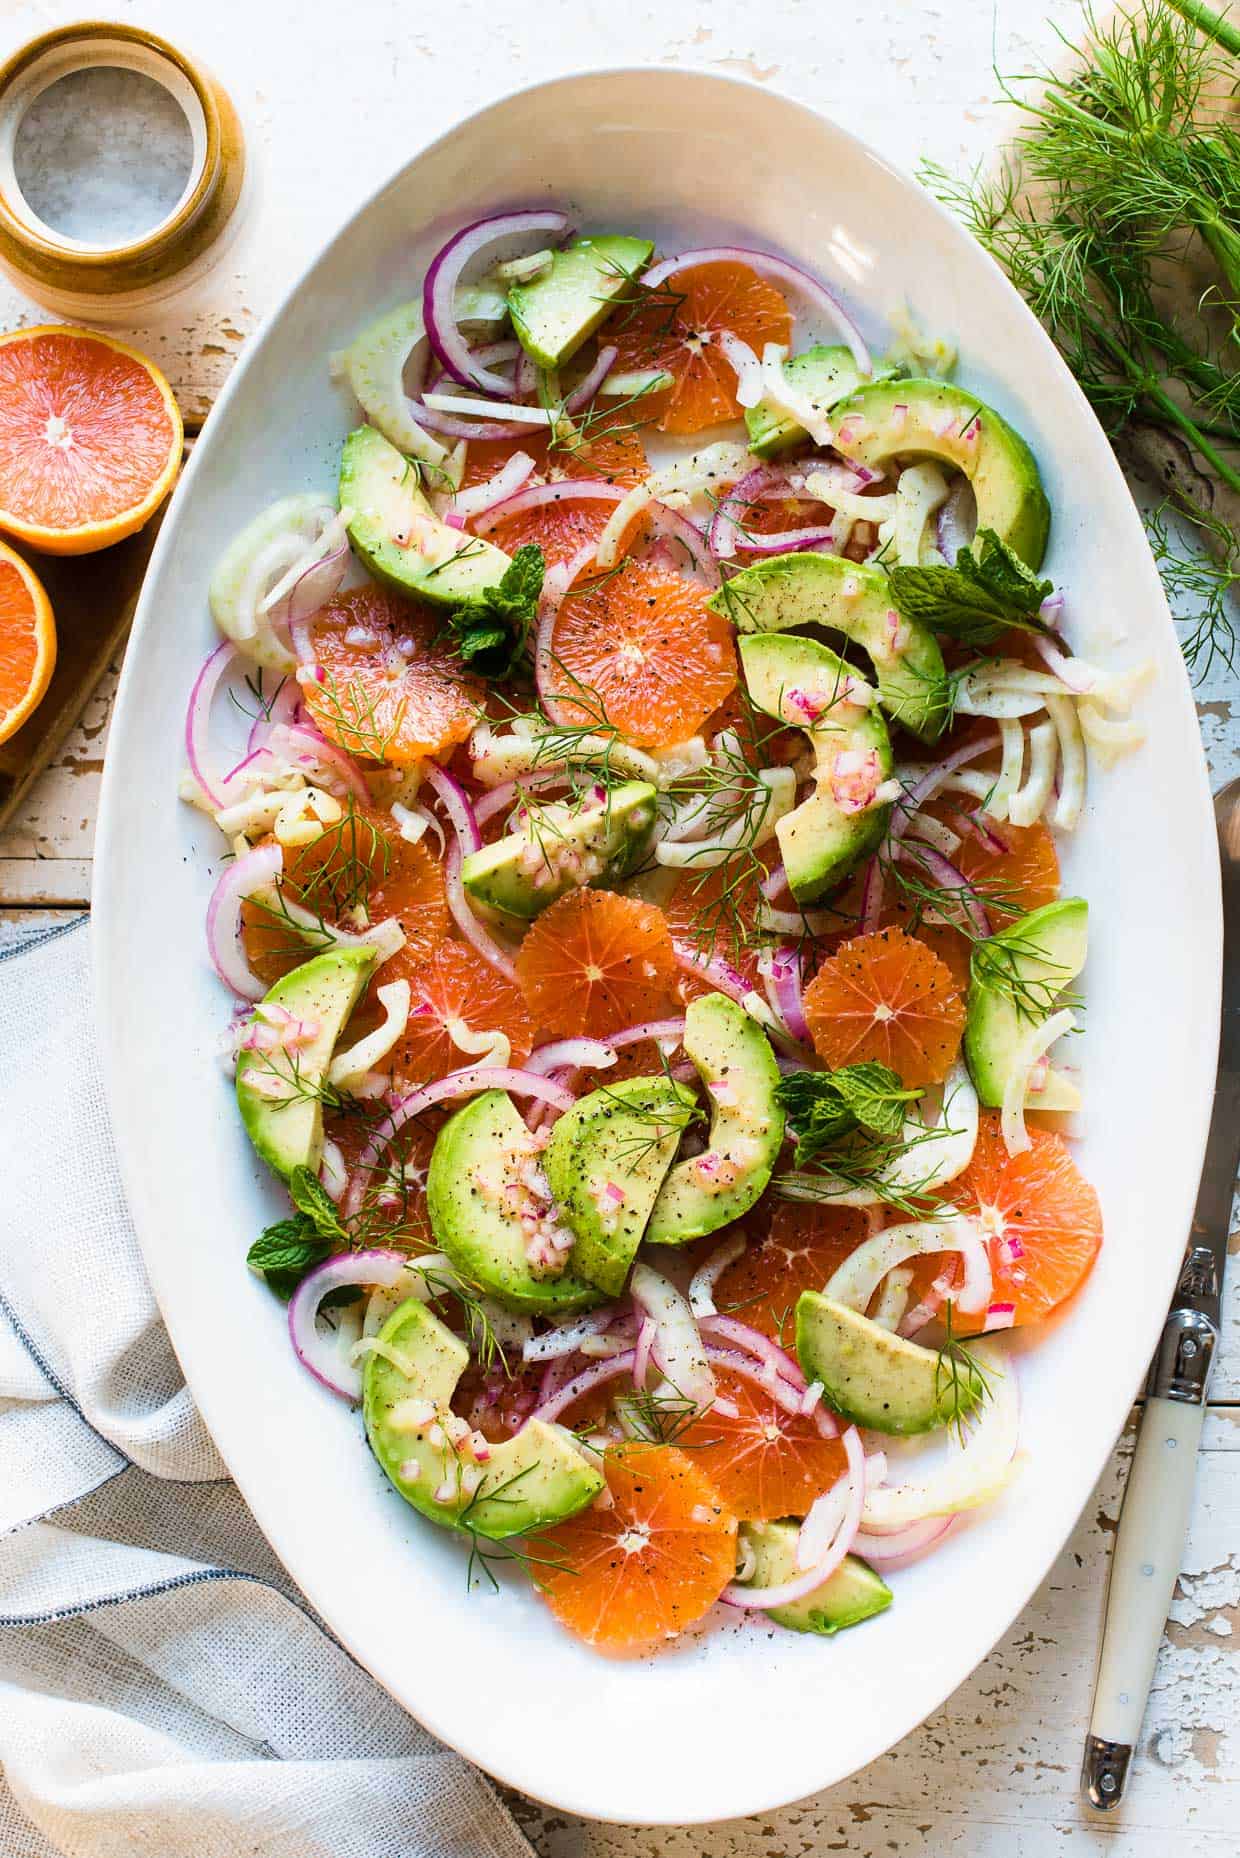 https://kitchenconfidante.com/wp-content/uploads/2019/01/Citrus-and-Avocado-Salad-with-Quick-Pickled-Fennel-kitchenconfidante.com-6407.jpg